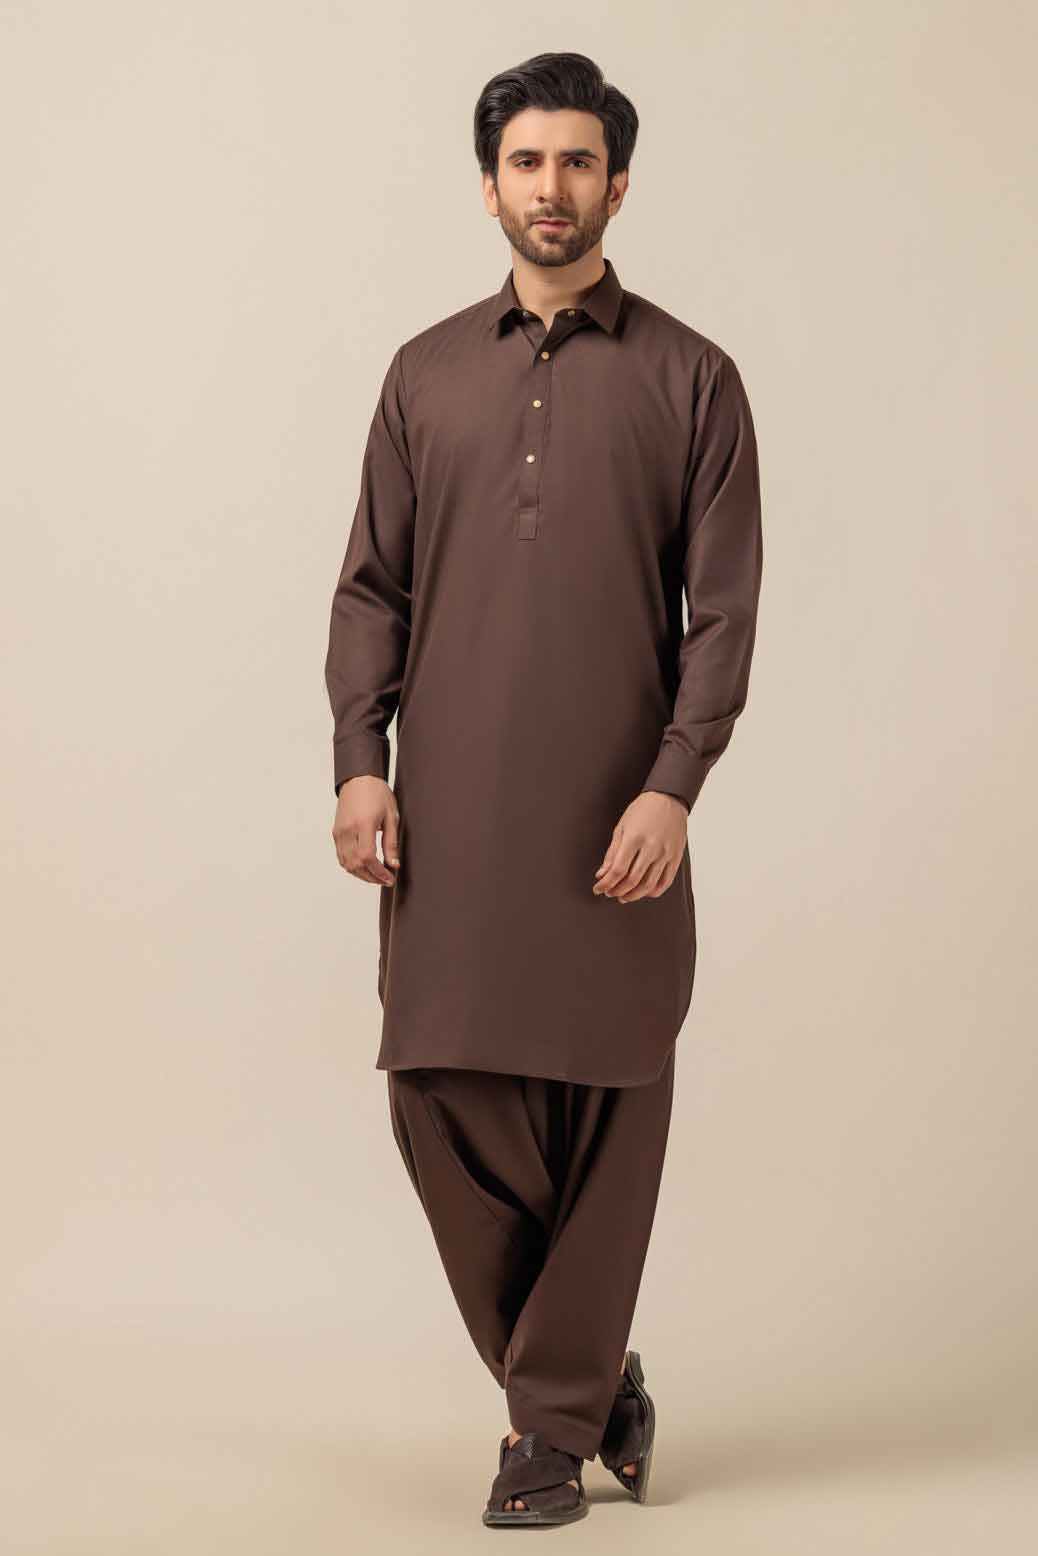 Bonanza shalwar suit for winter season